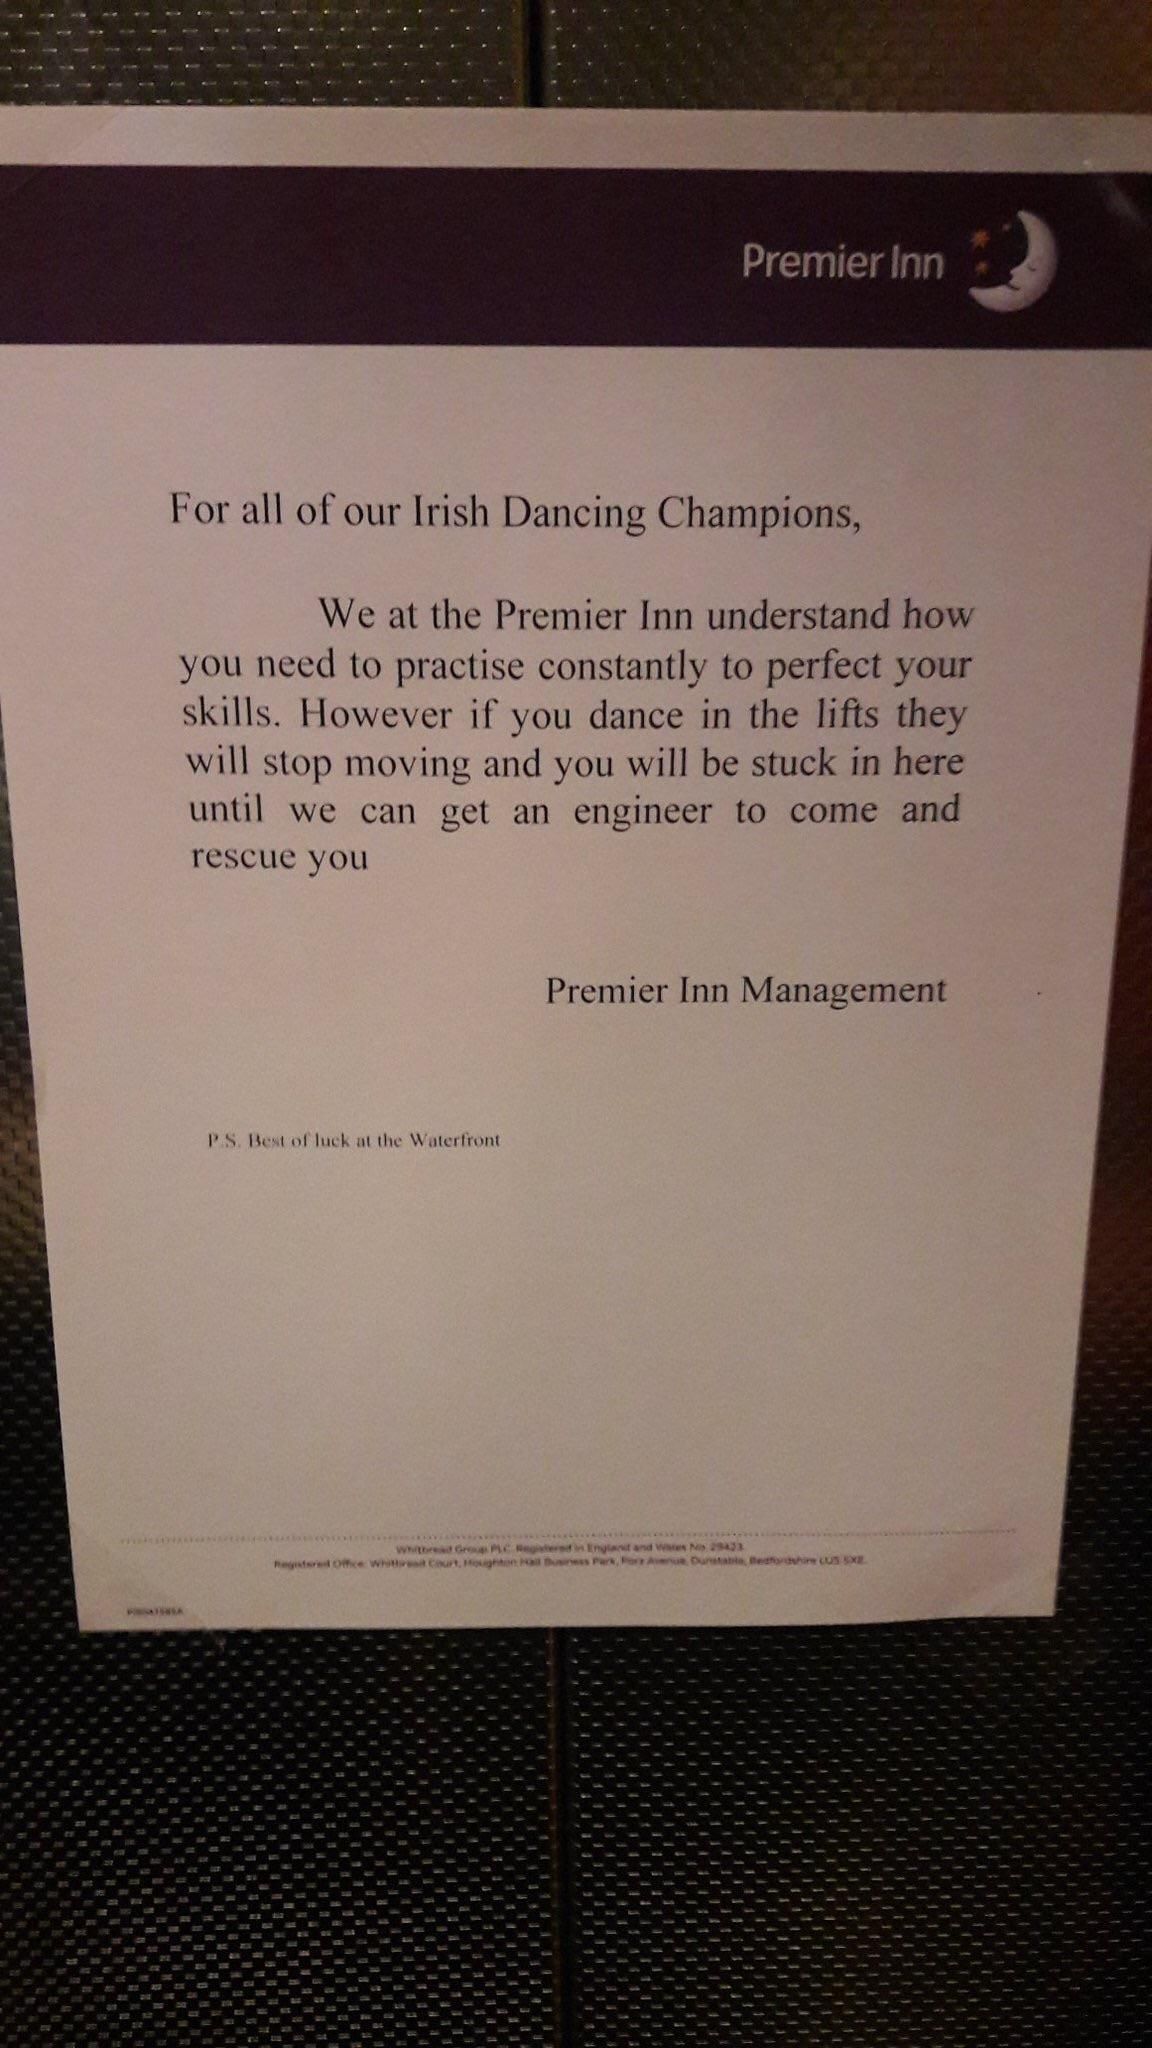 Belfast hotel warns Irish dancing guests against practising in elevator.